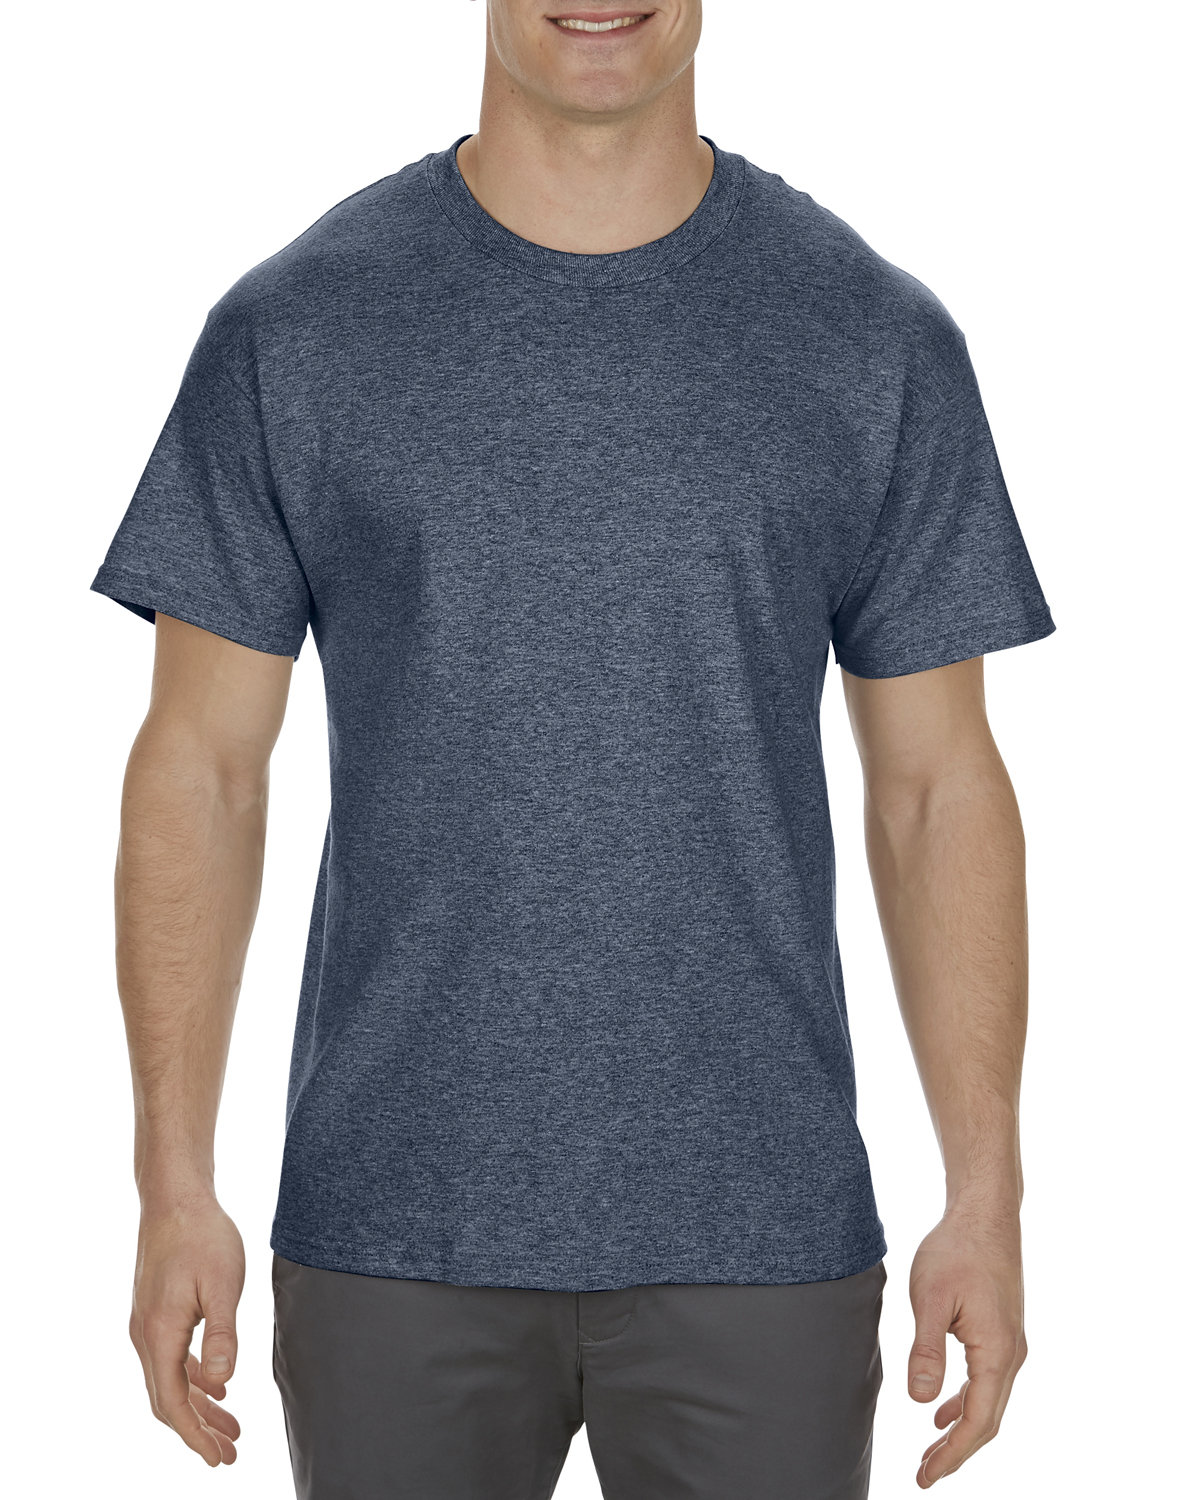 Alstyle Adult 5.1 oz., 100% Soft Spun Cotton T-Shirt NAVY HEATHER 